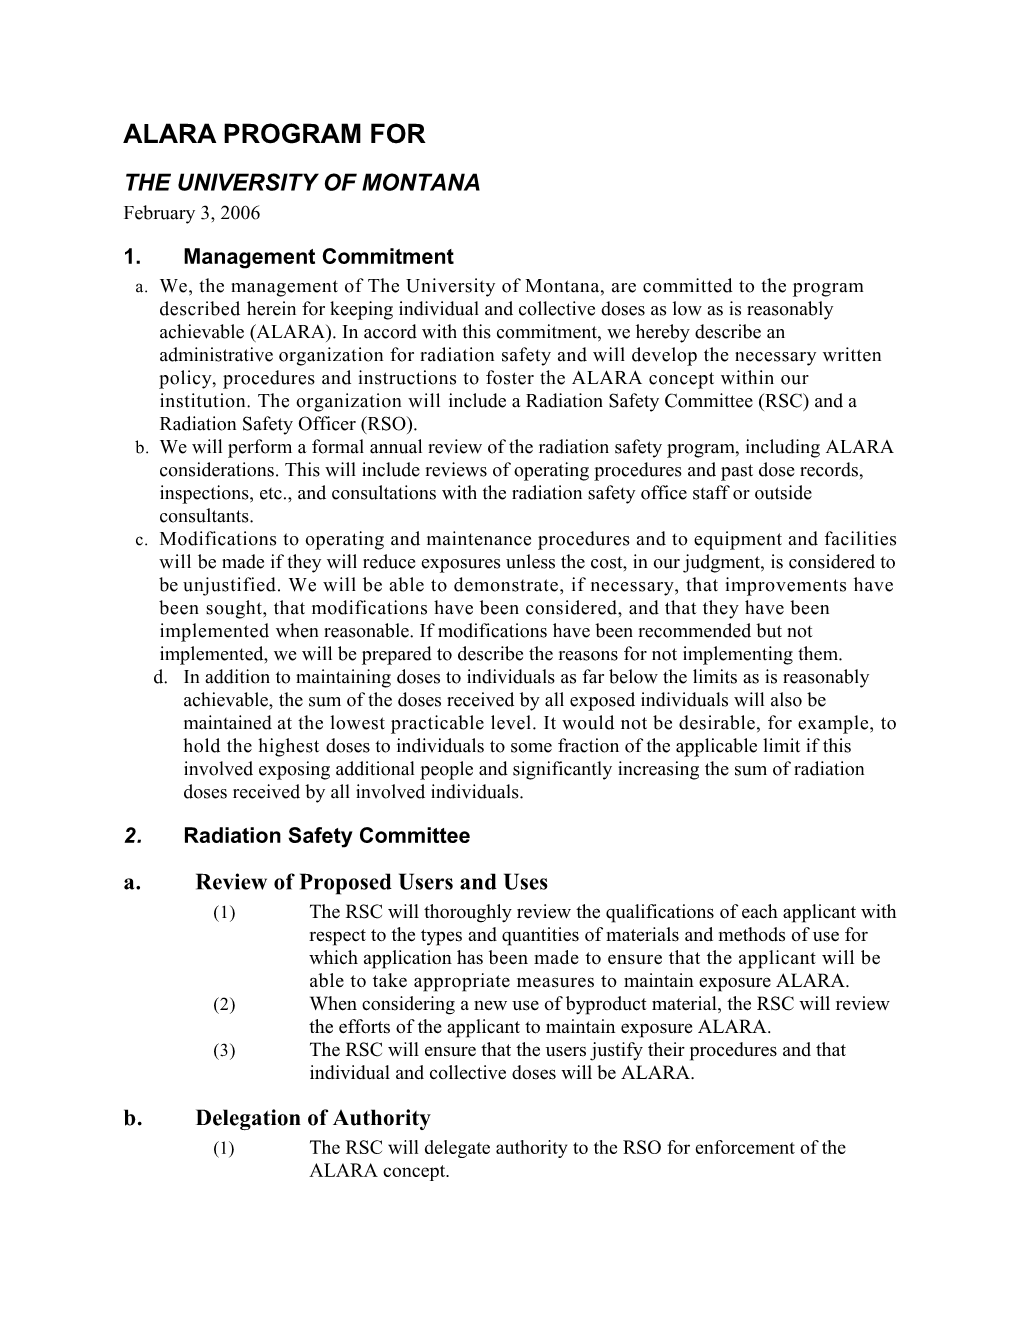 University of Montana License Application 44